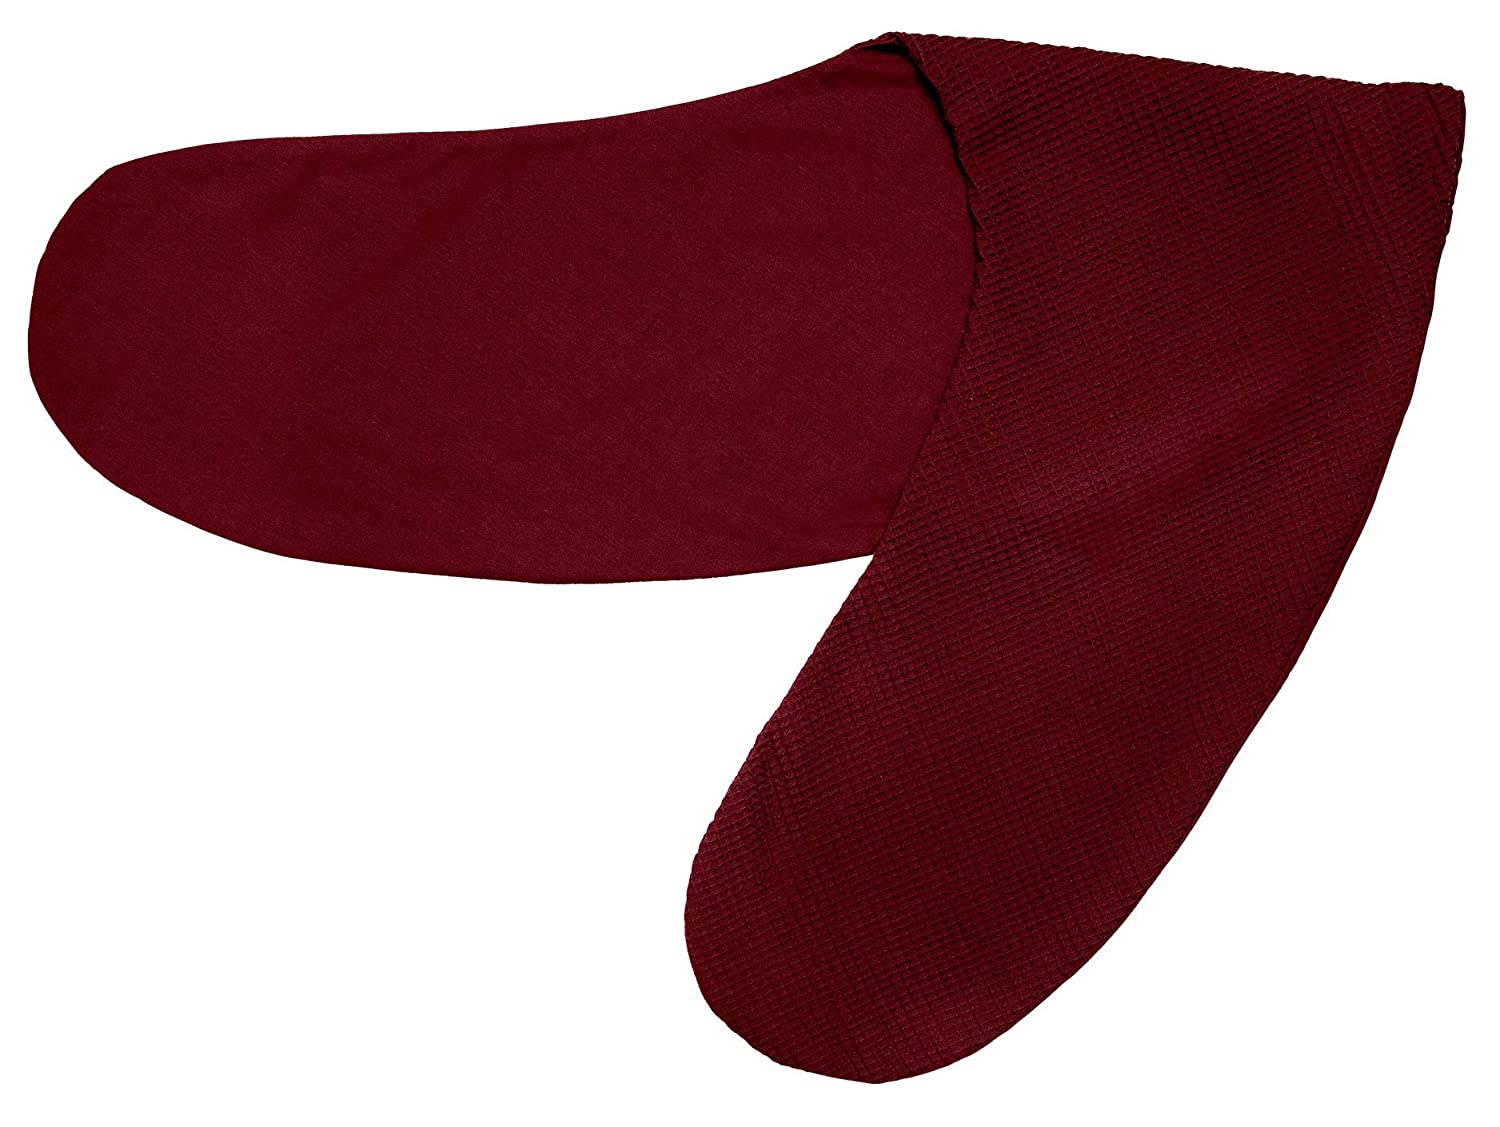 Ideenreich Ideenreich 2464 Nursing Pillow Cover 190 cm Berry Red